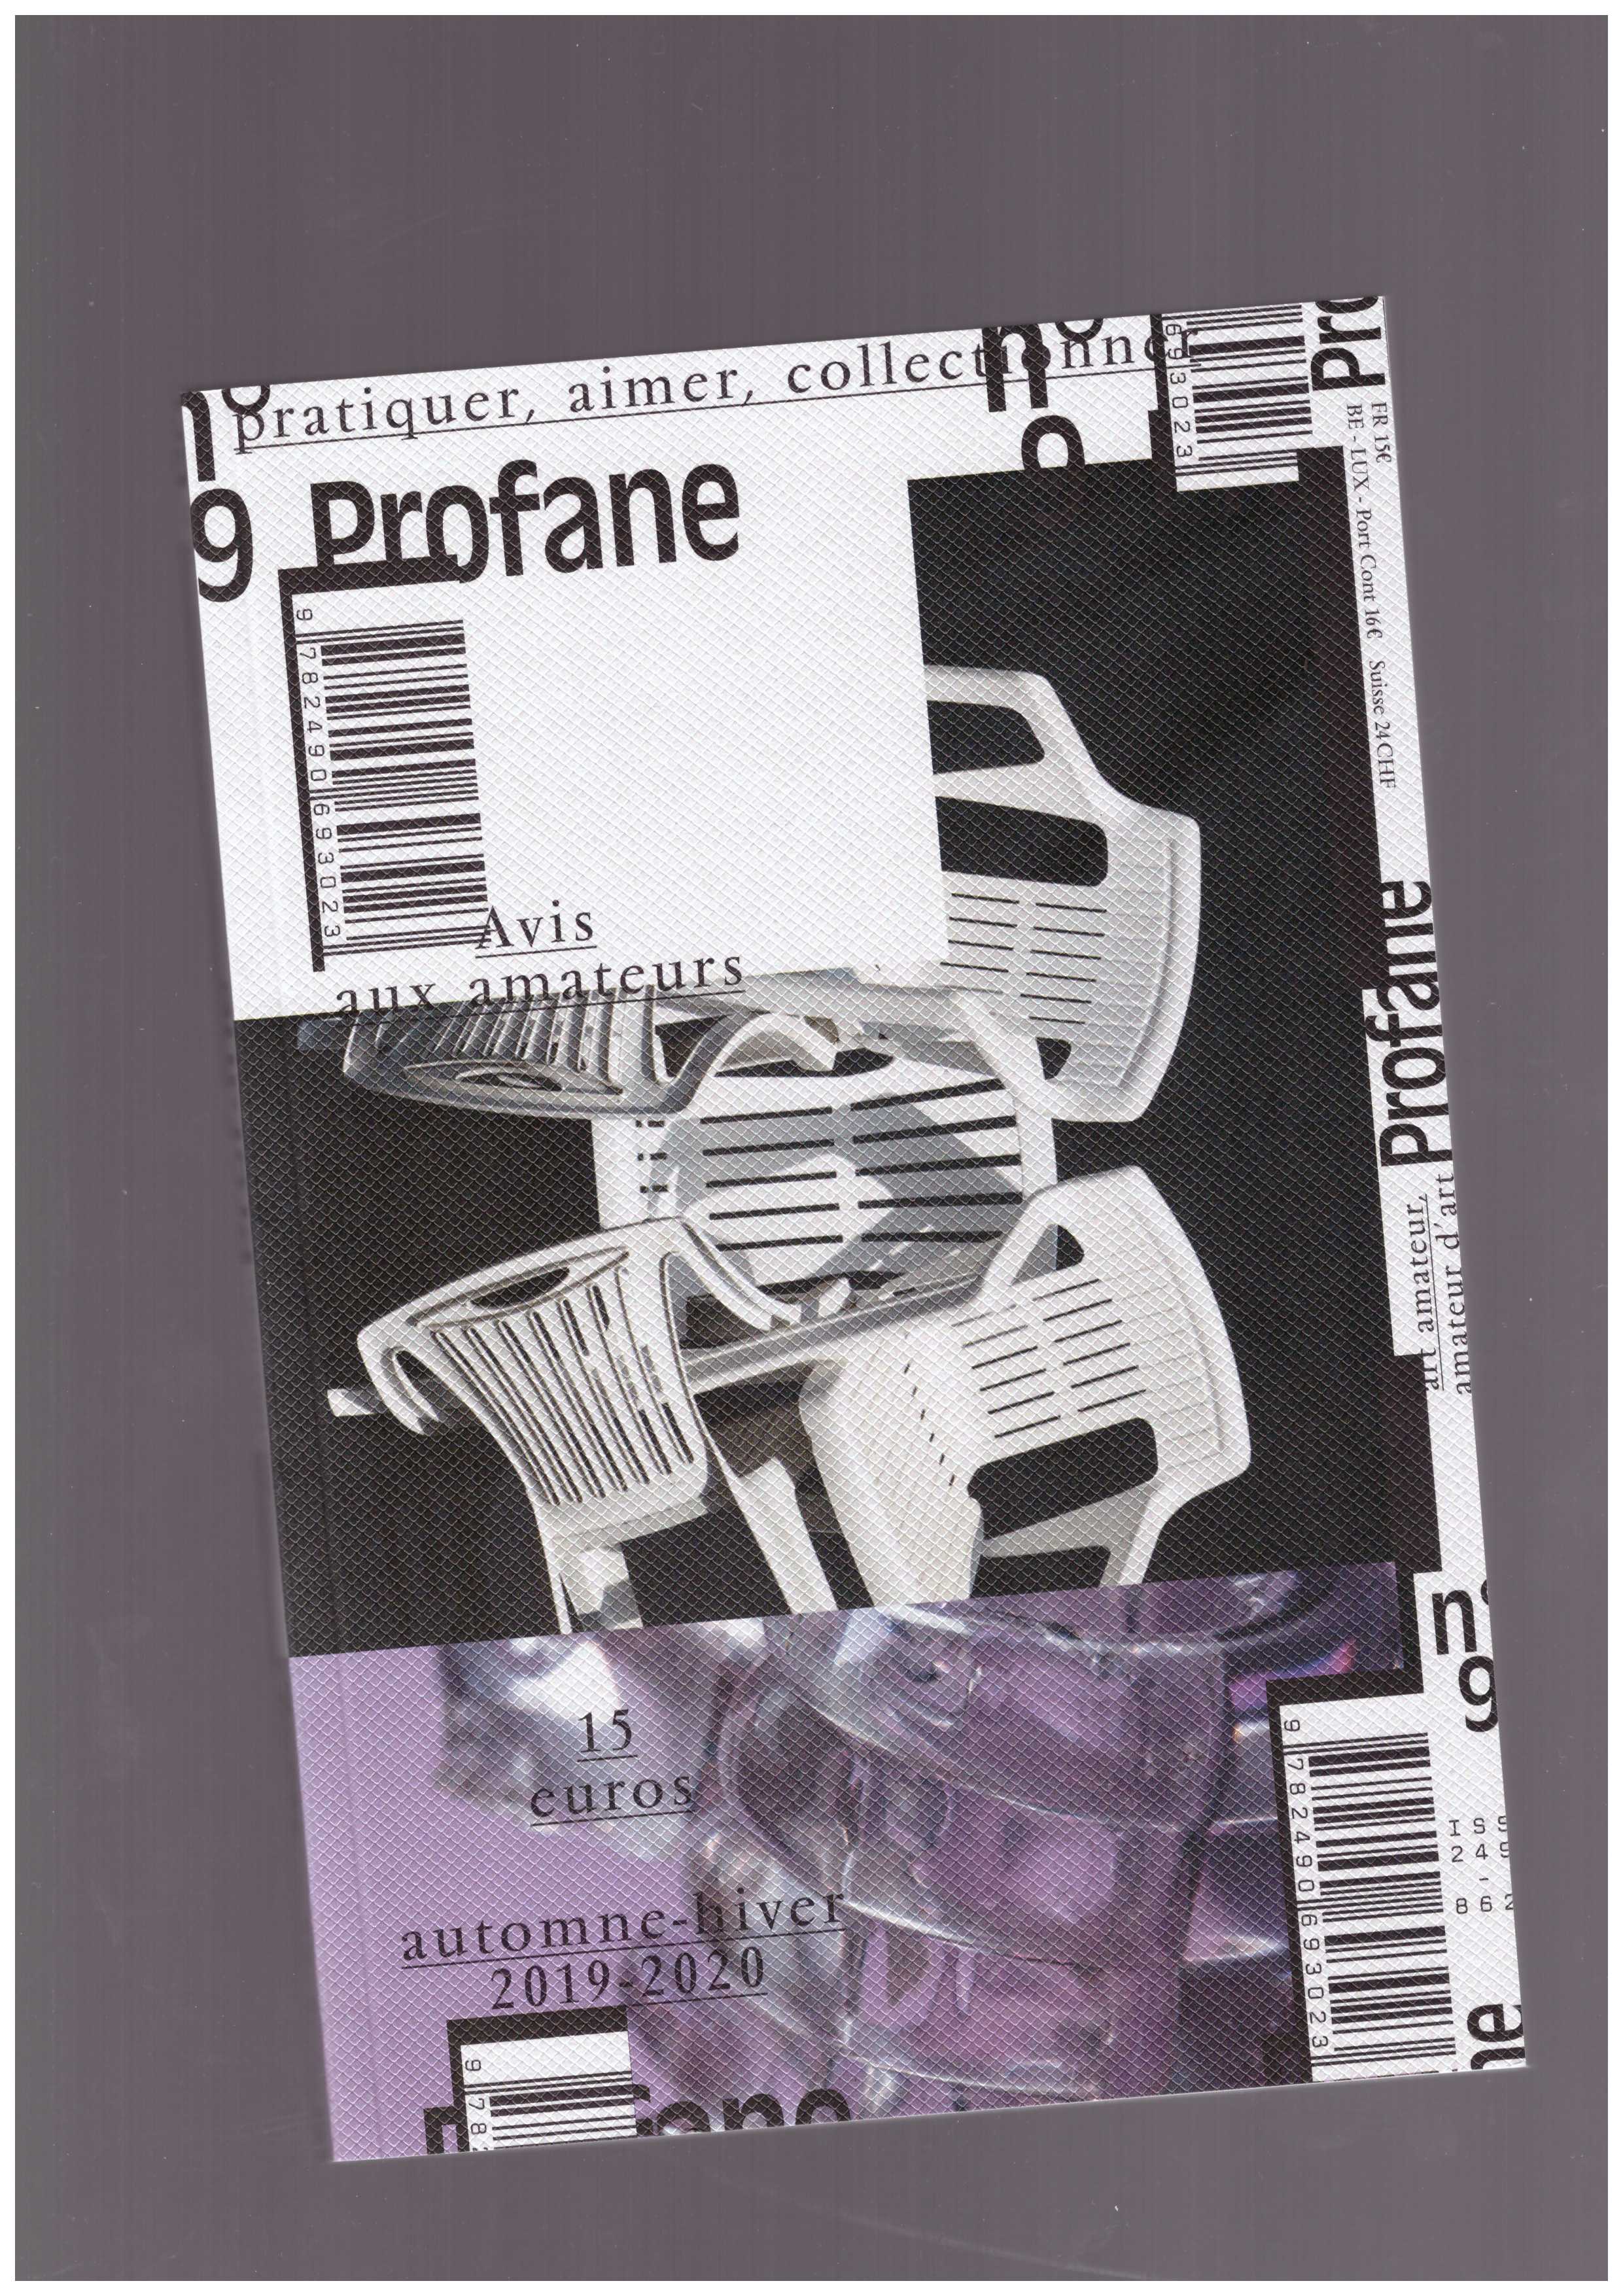 HOUDIN, Bertrand; HALPERN, Charlotte; SOYER, Carine (eds.) - Profane N°9